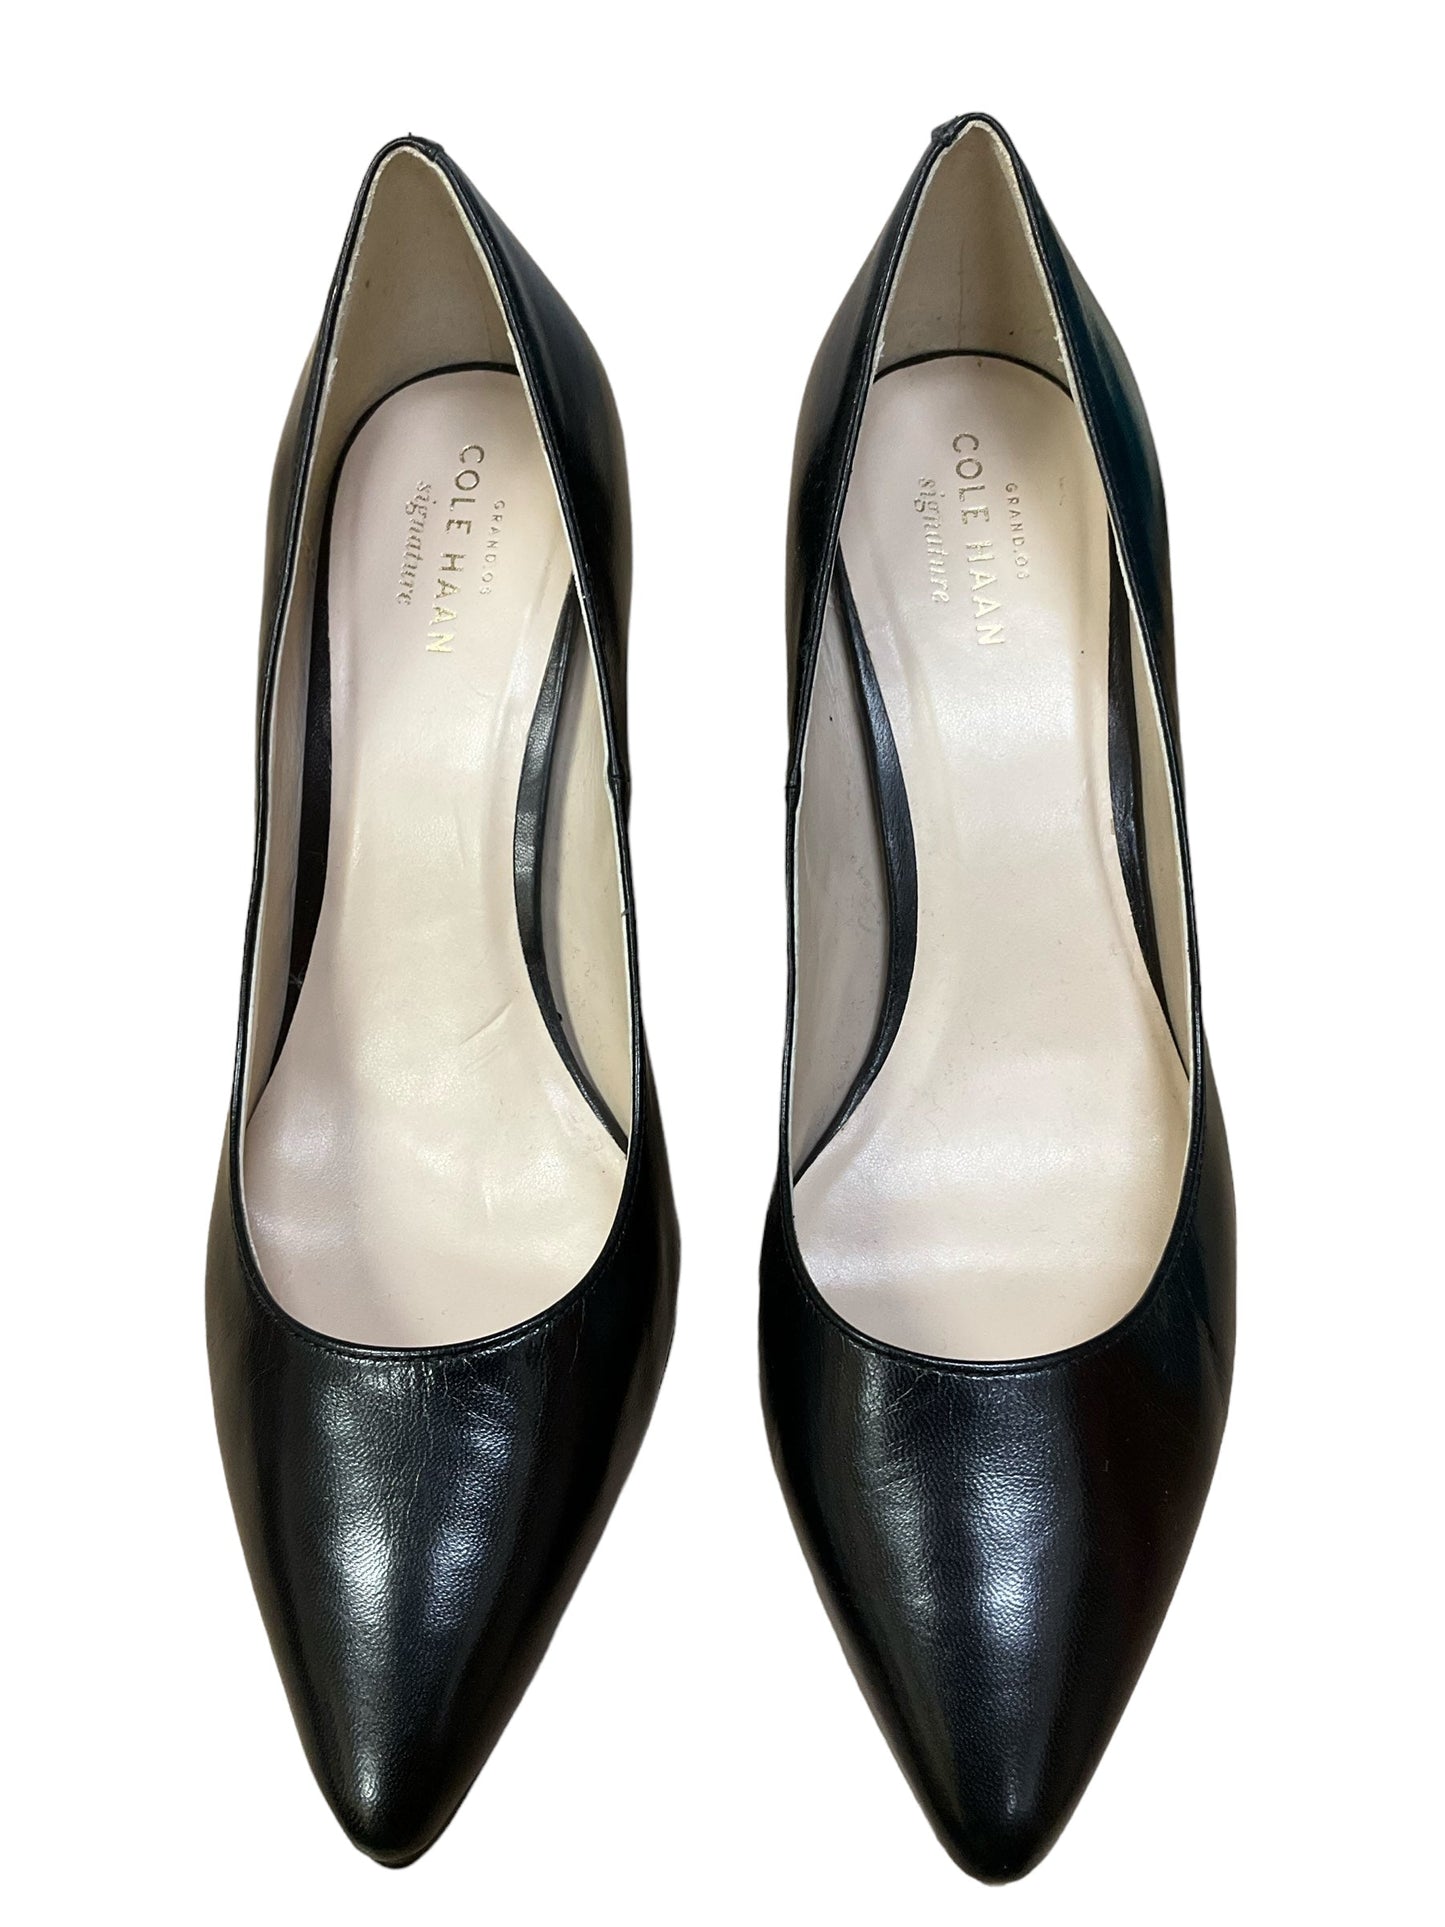 Black Shoes Heels Stiletto Cole-haan, Size 7